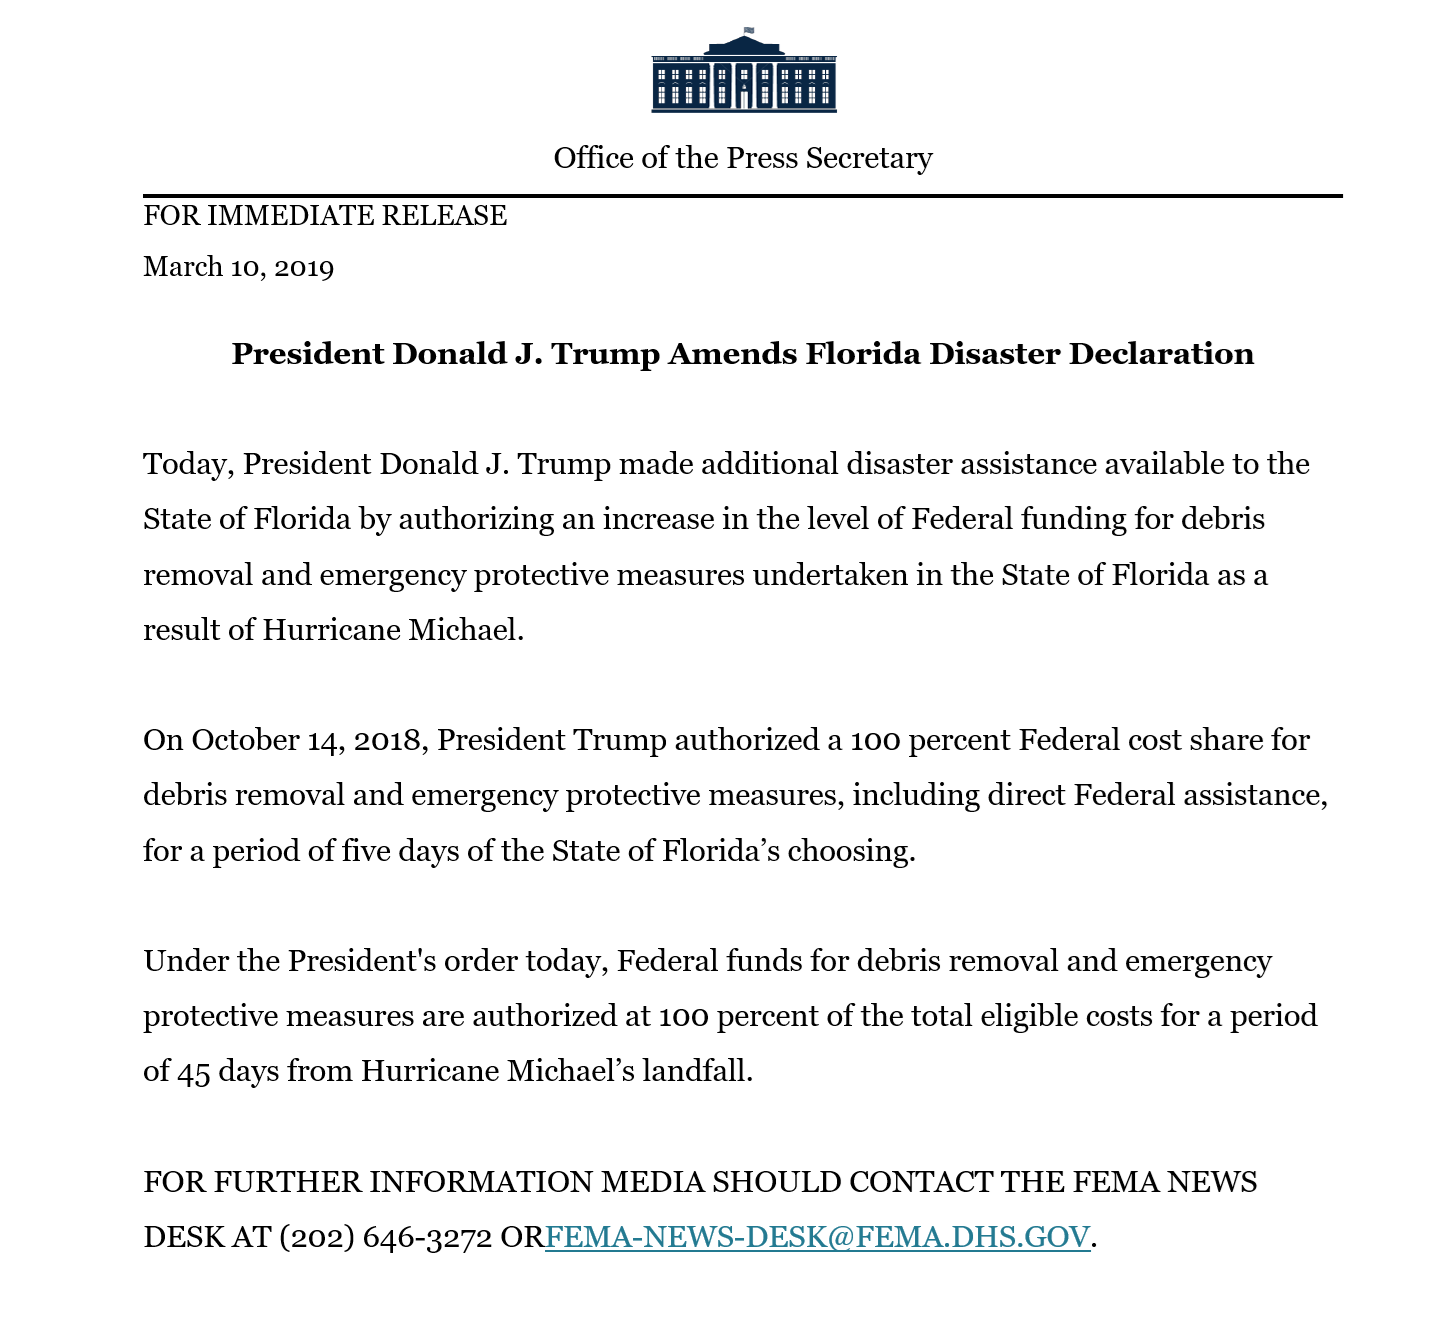 PresidentDonaldJTrumpAmendsFloridaDisasterDeclaration